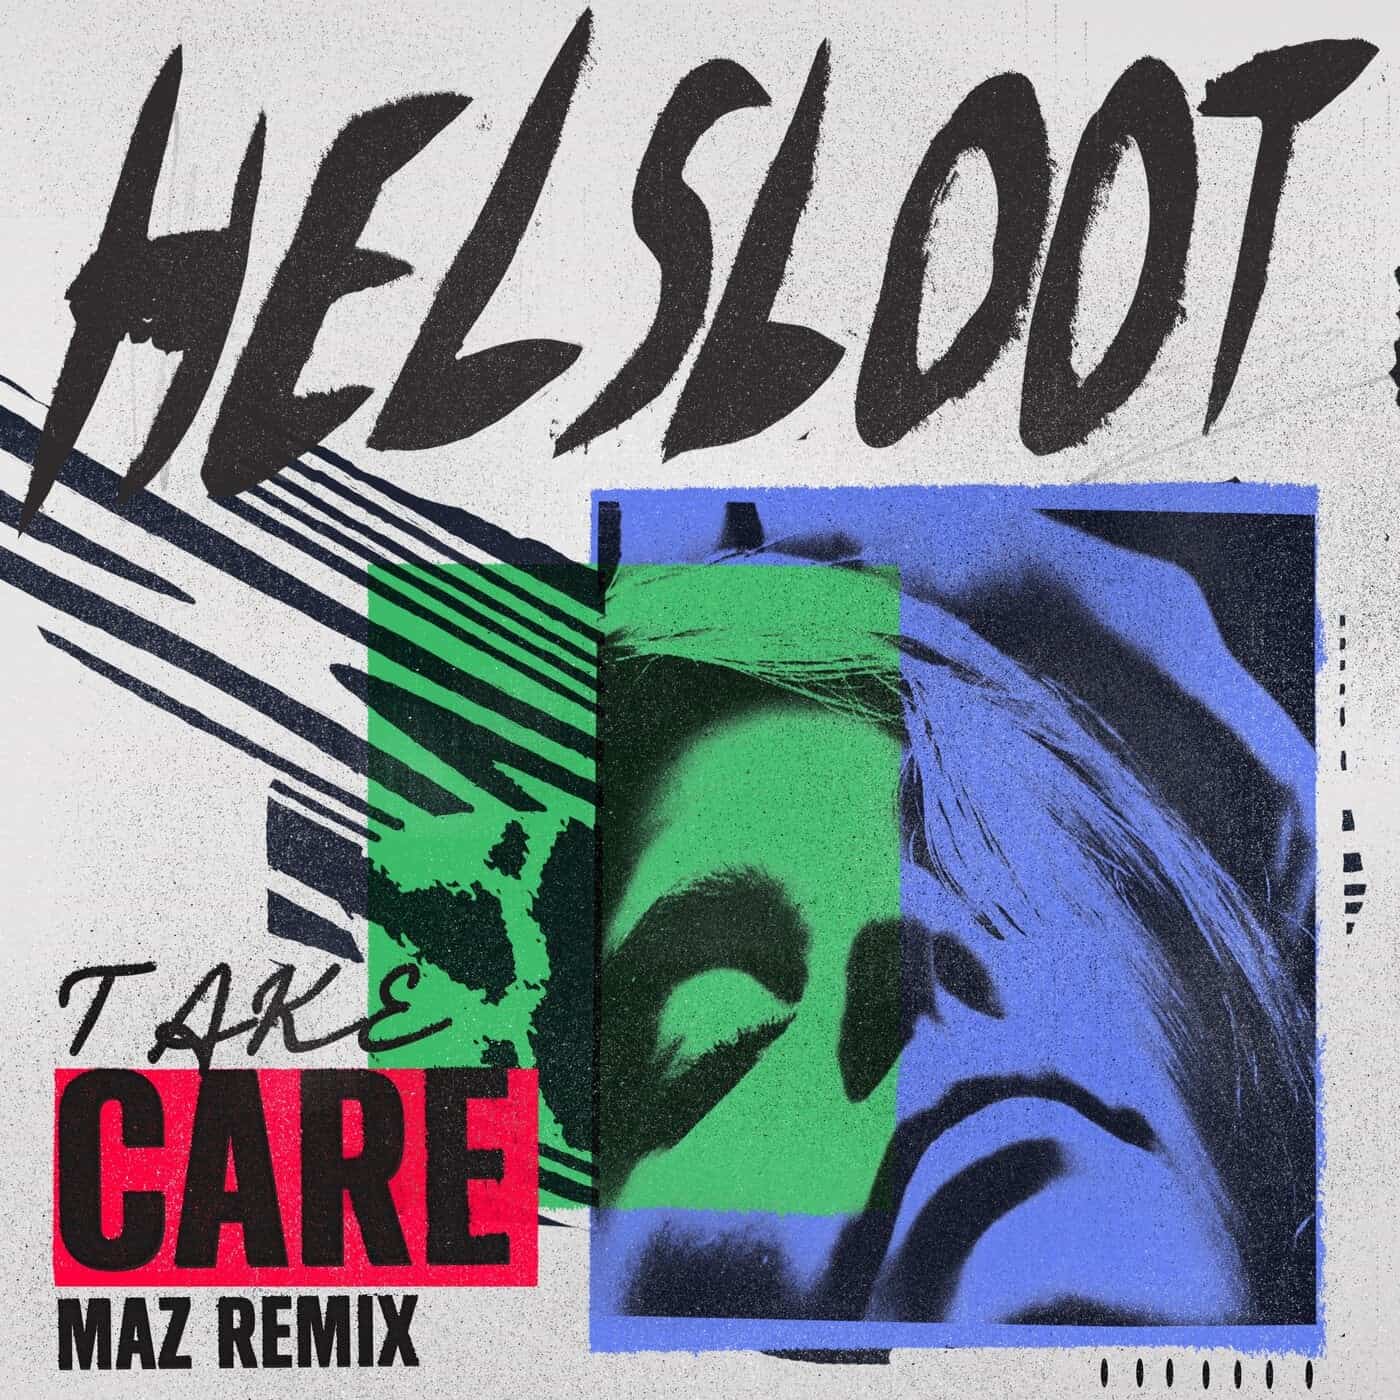 Download Helsloot - Take Care (Maz Remix) on Electrobuzz